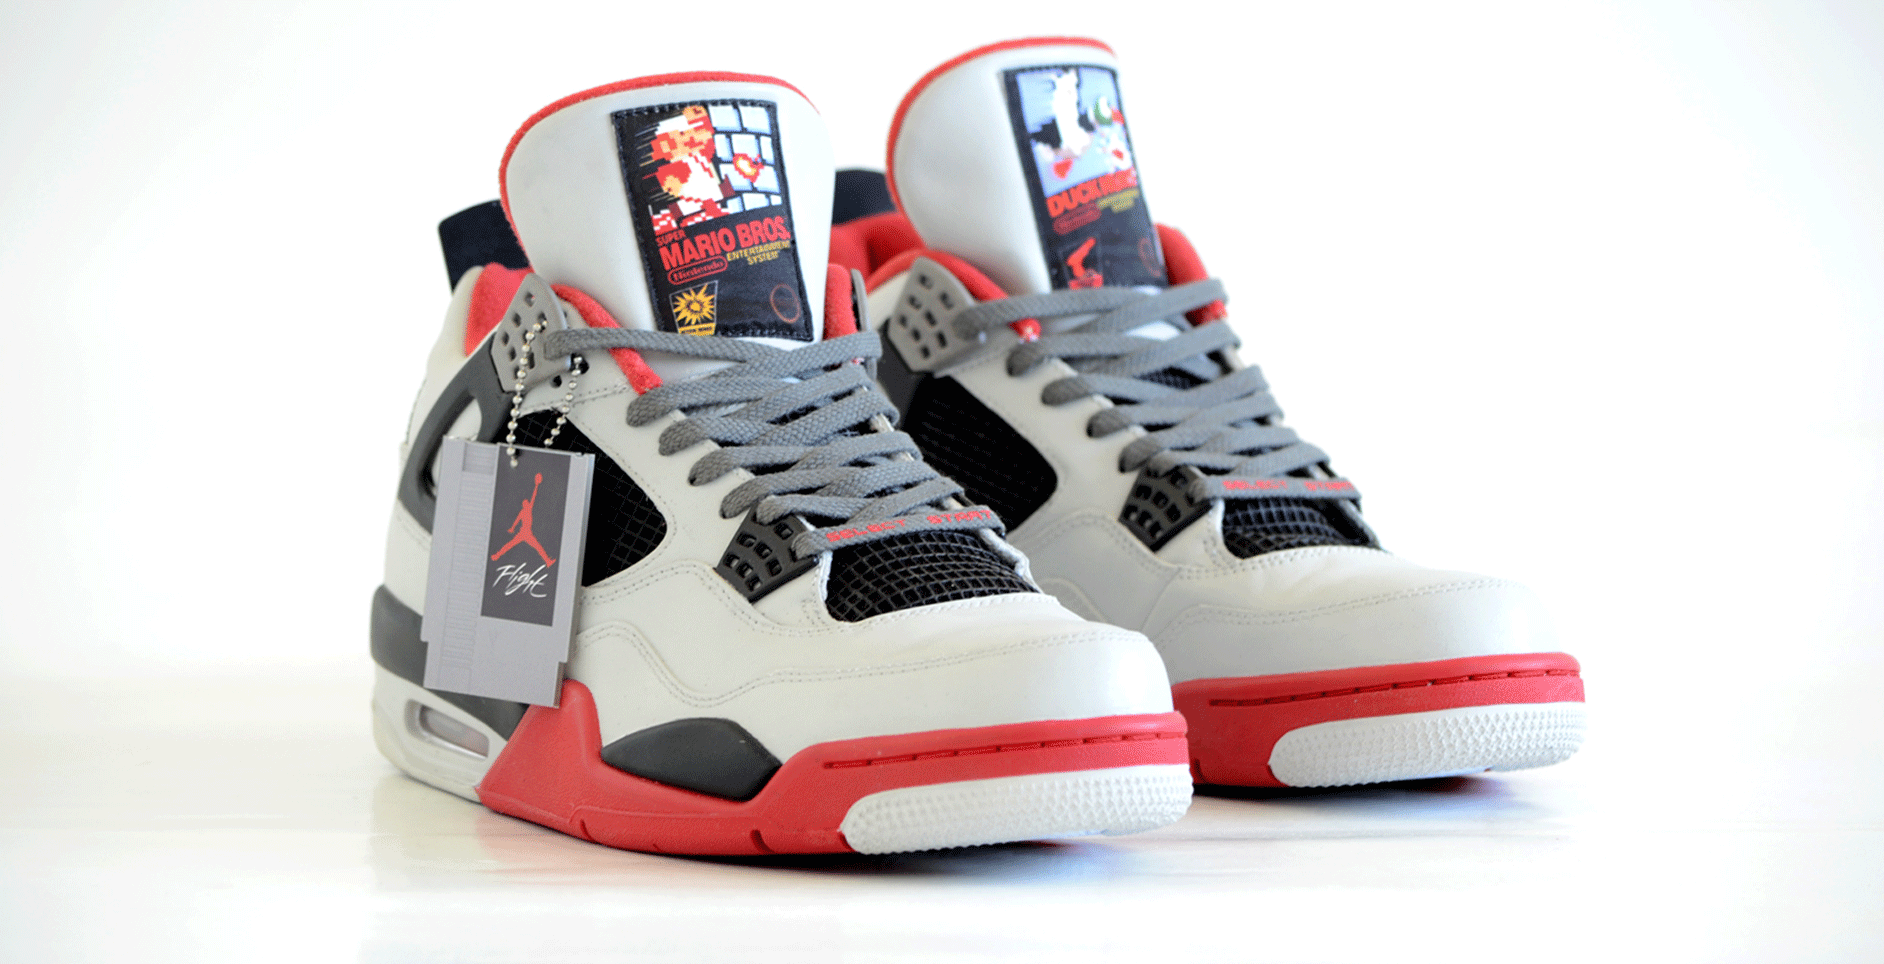 NES Air-Jordan Sneakers Are The New Hip